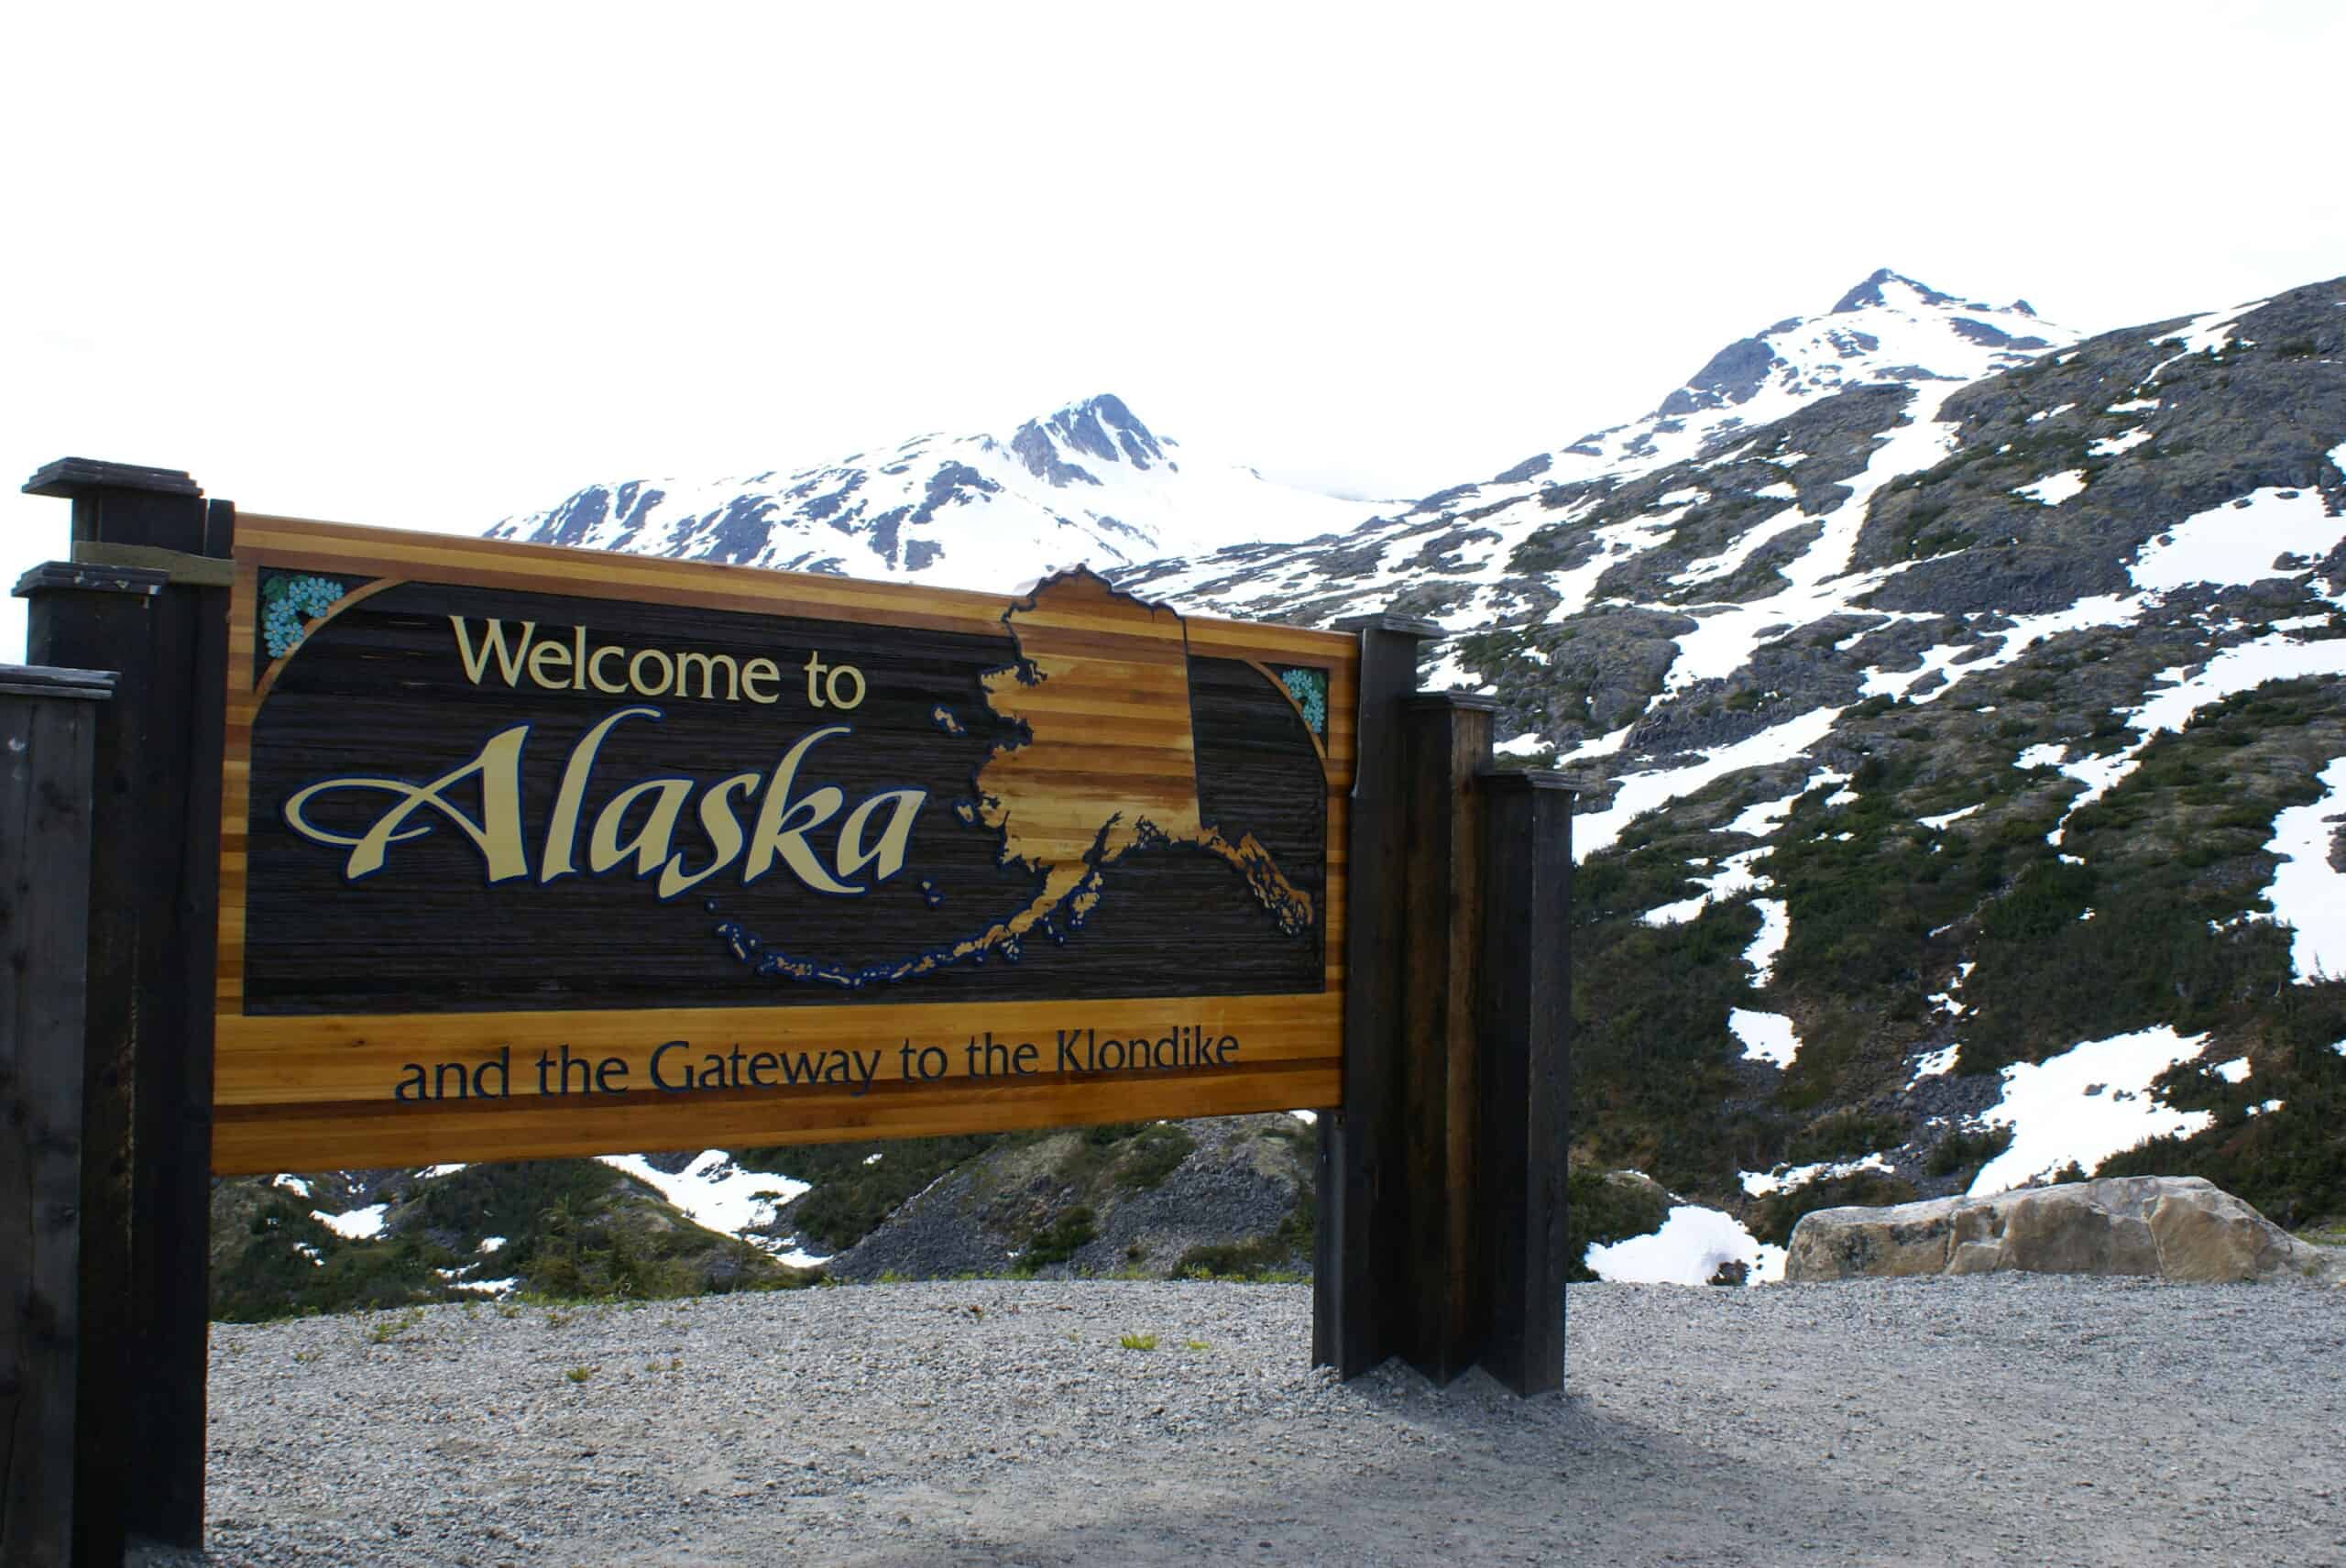 Welcome to Alaska sign by Richard Martin